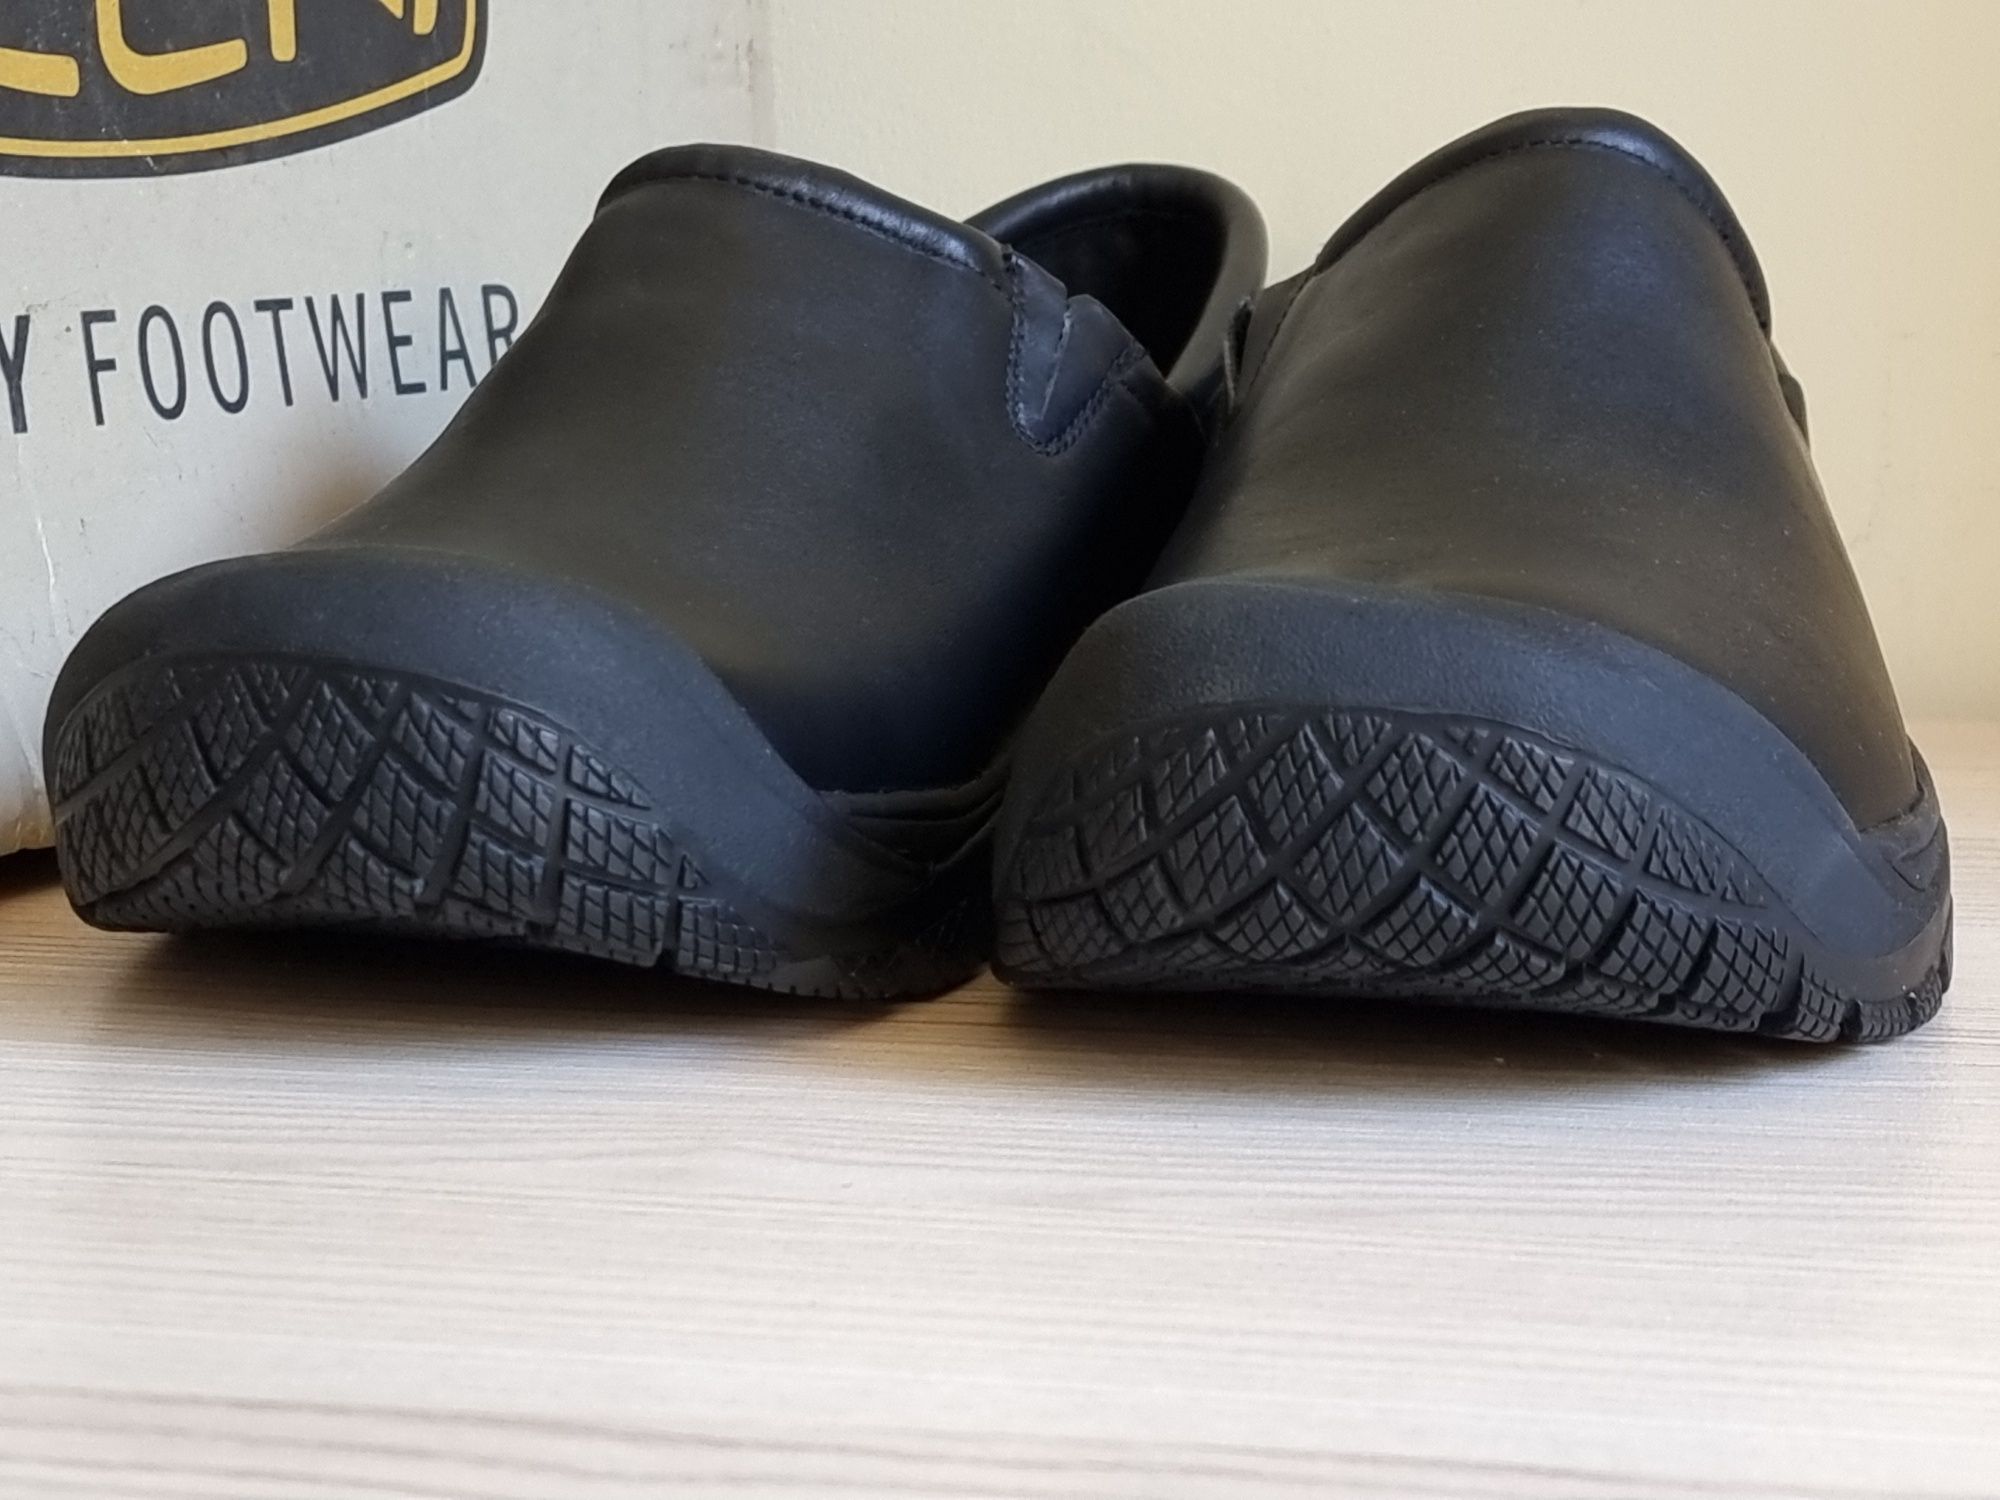 Работни обувки KEEN Utility PTC 47 номер - нови